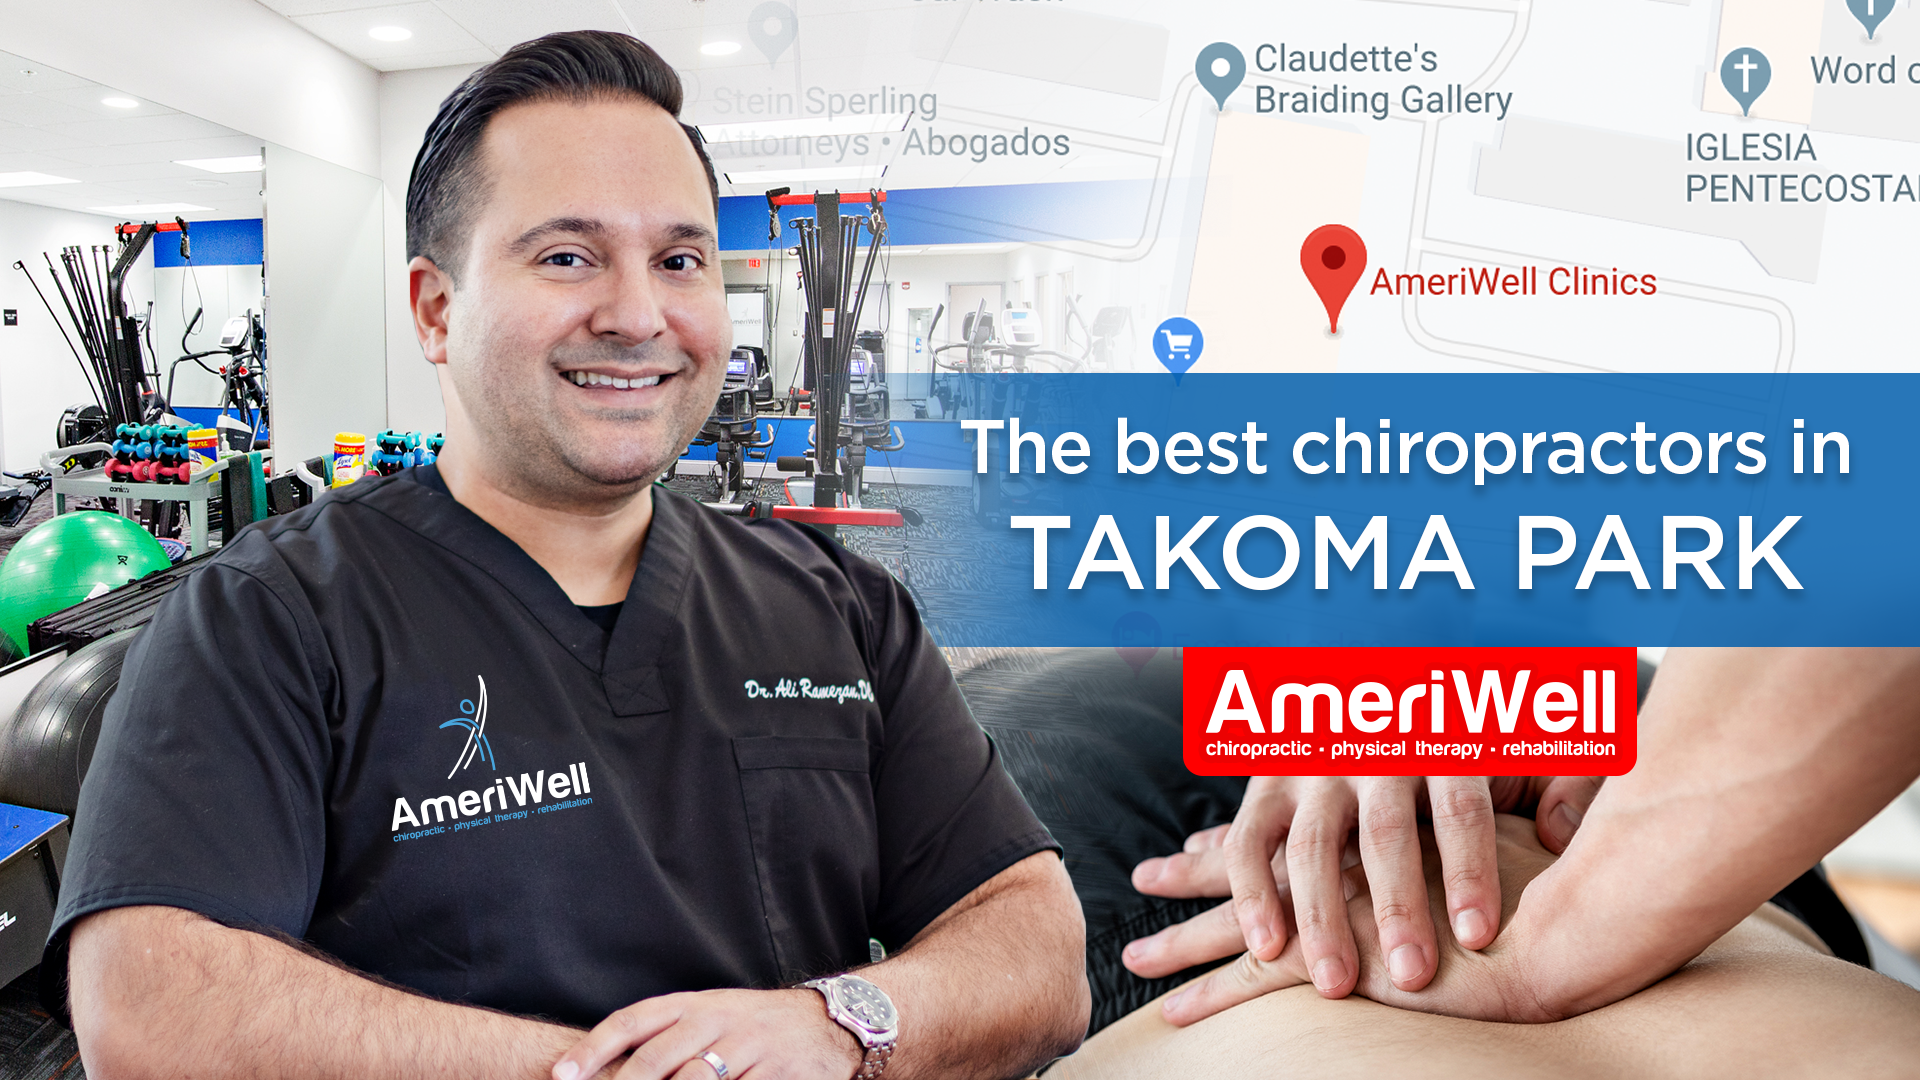 Takoma Park – Ameriwell Clinics the best chiropractors